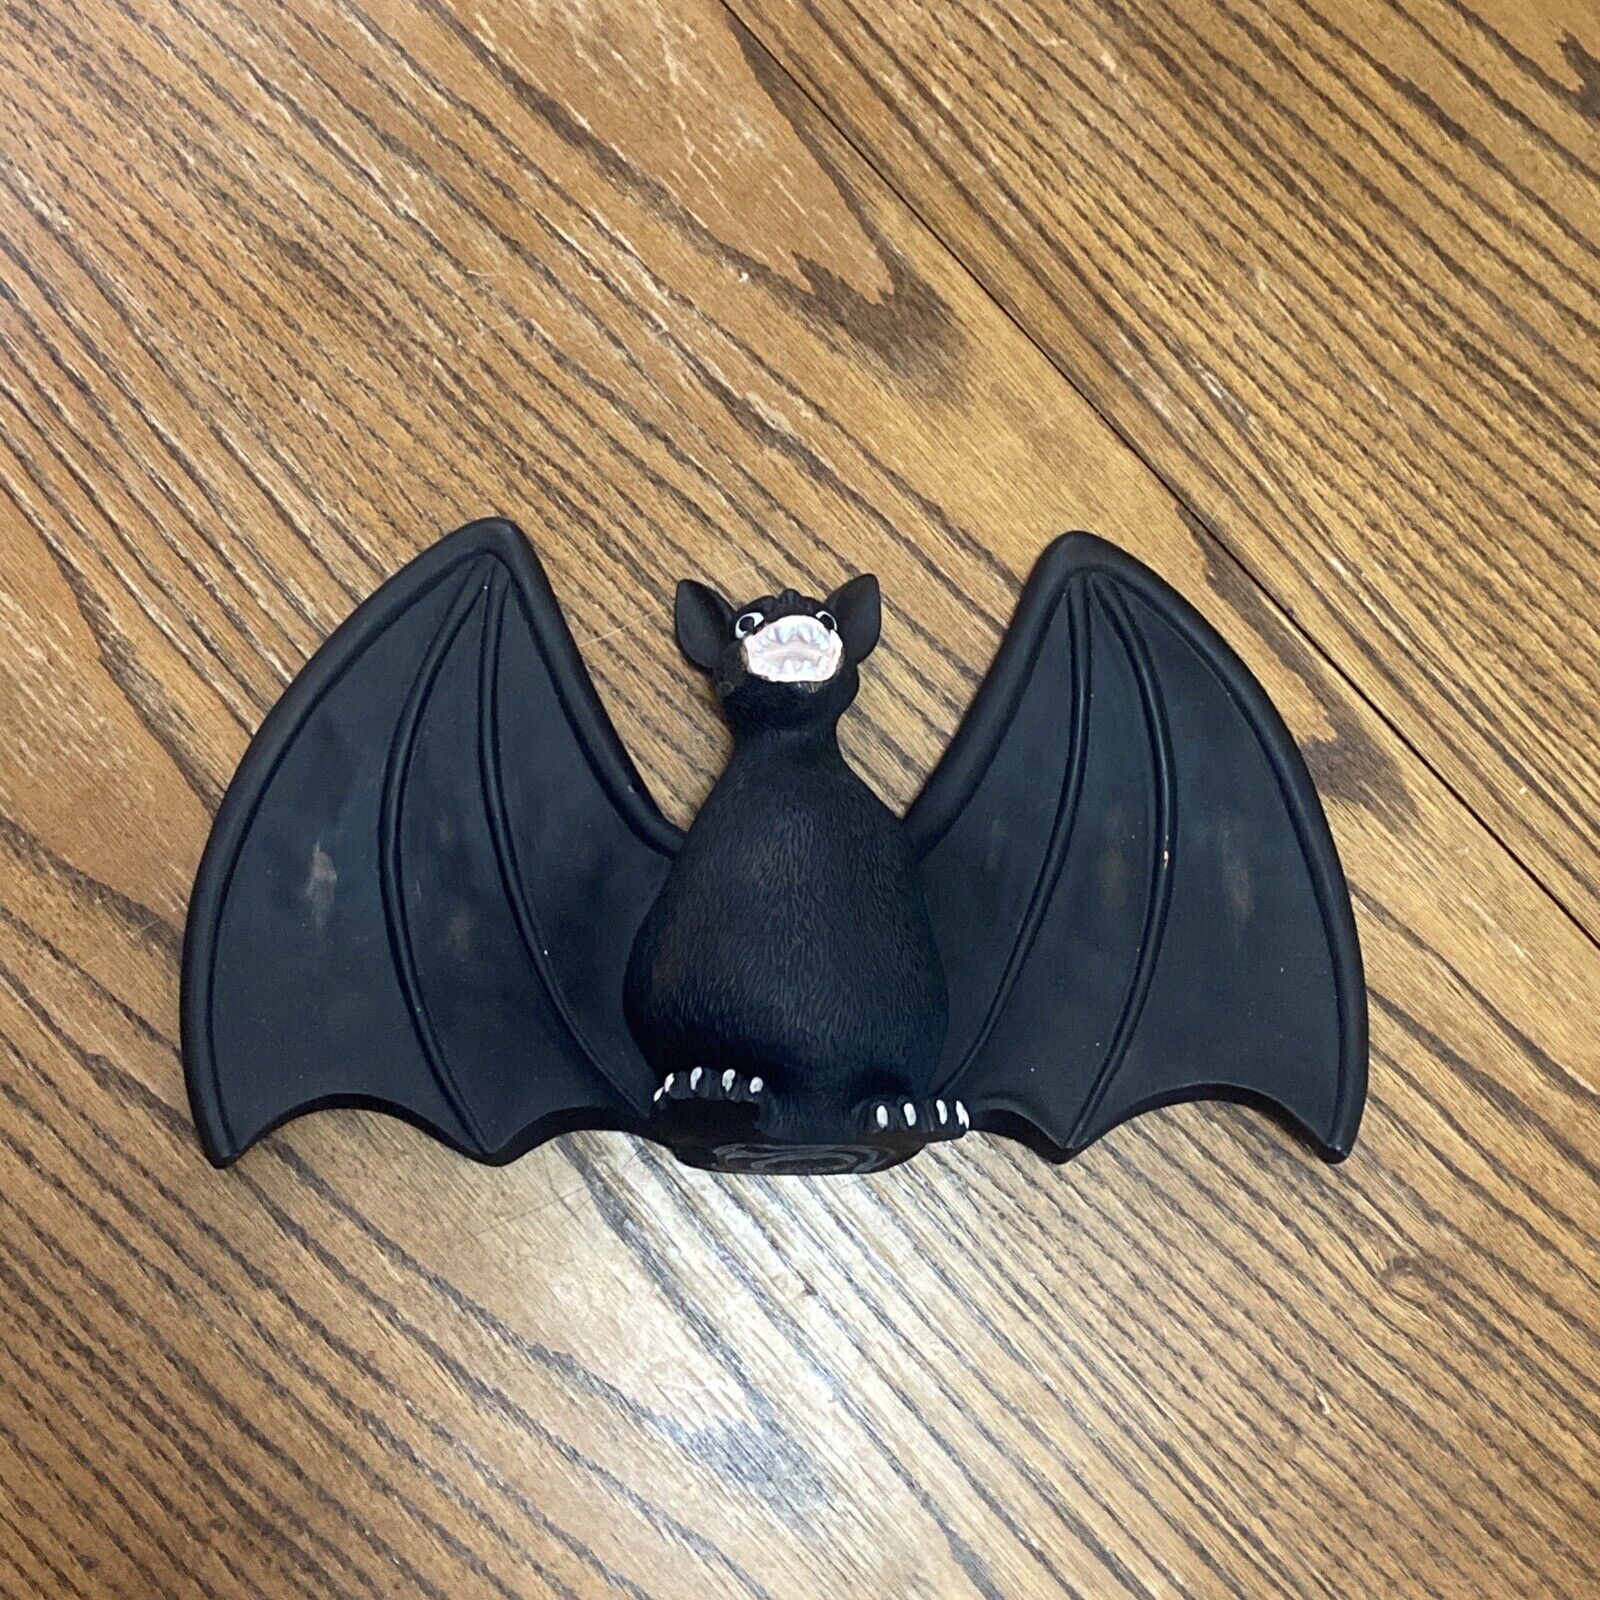 Vintage Haunted Halloween House Decor Heavy Rubber  vampire bat